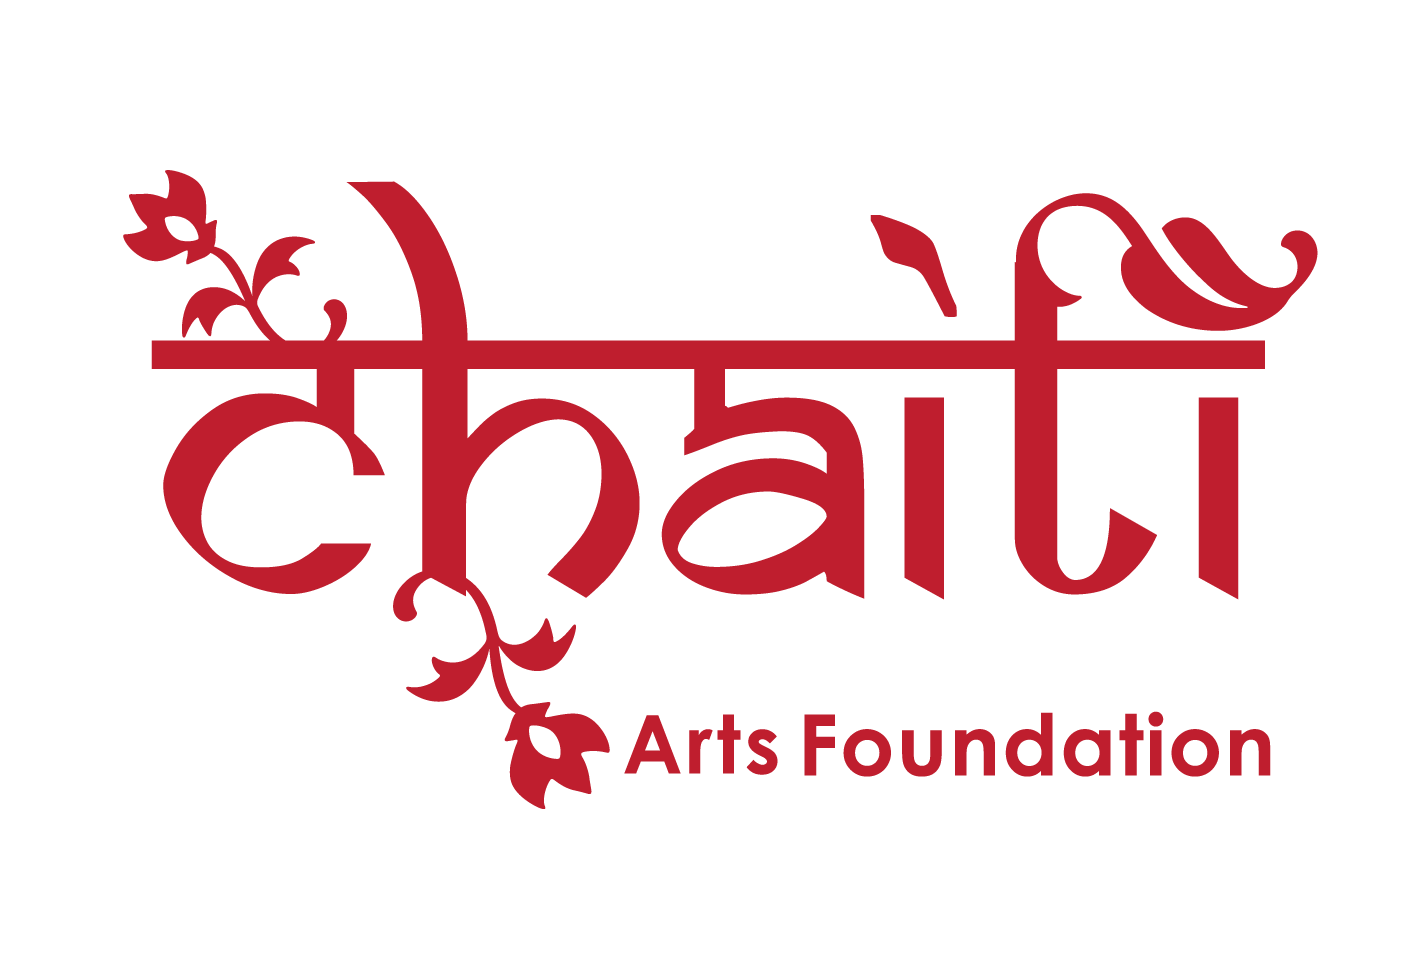 Chaiti Arts Foundation